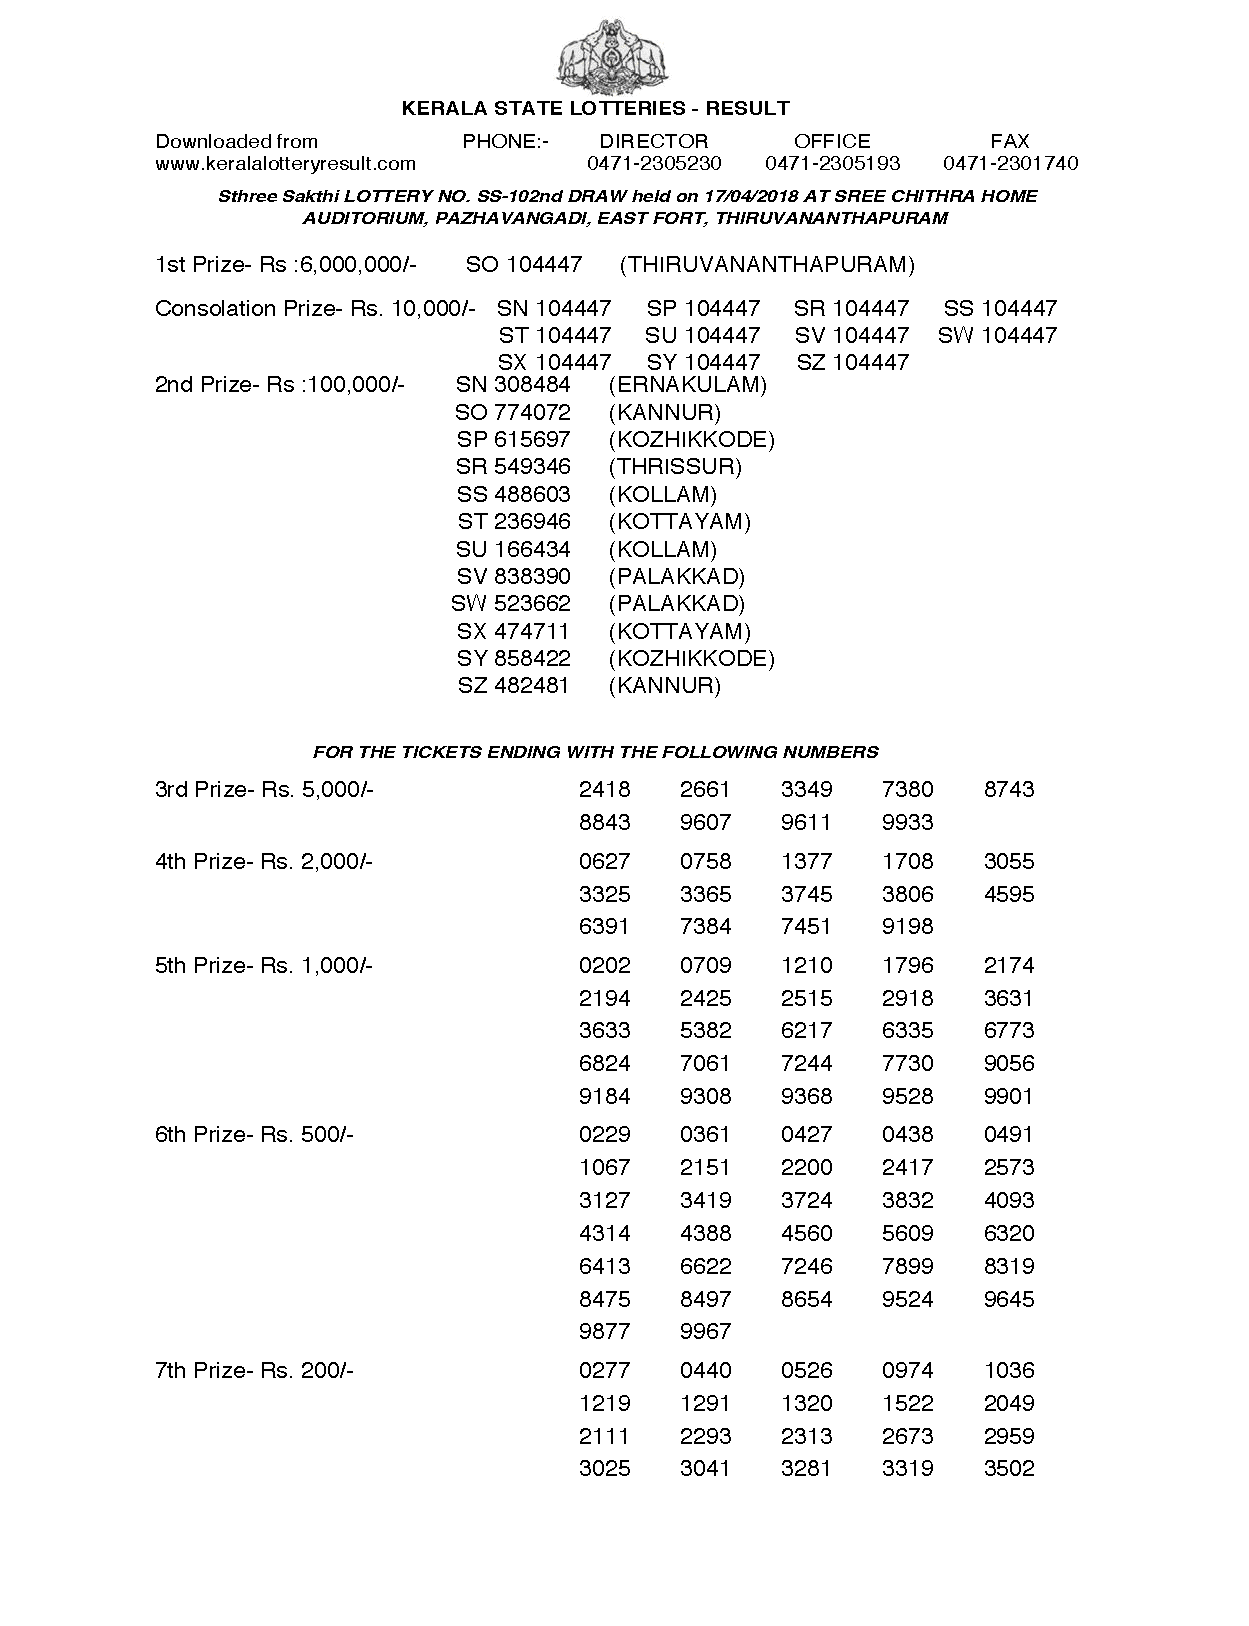 Sthree Sakthi SS102 Kerala Lottery Results Screenshot: Page 1